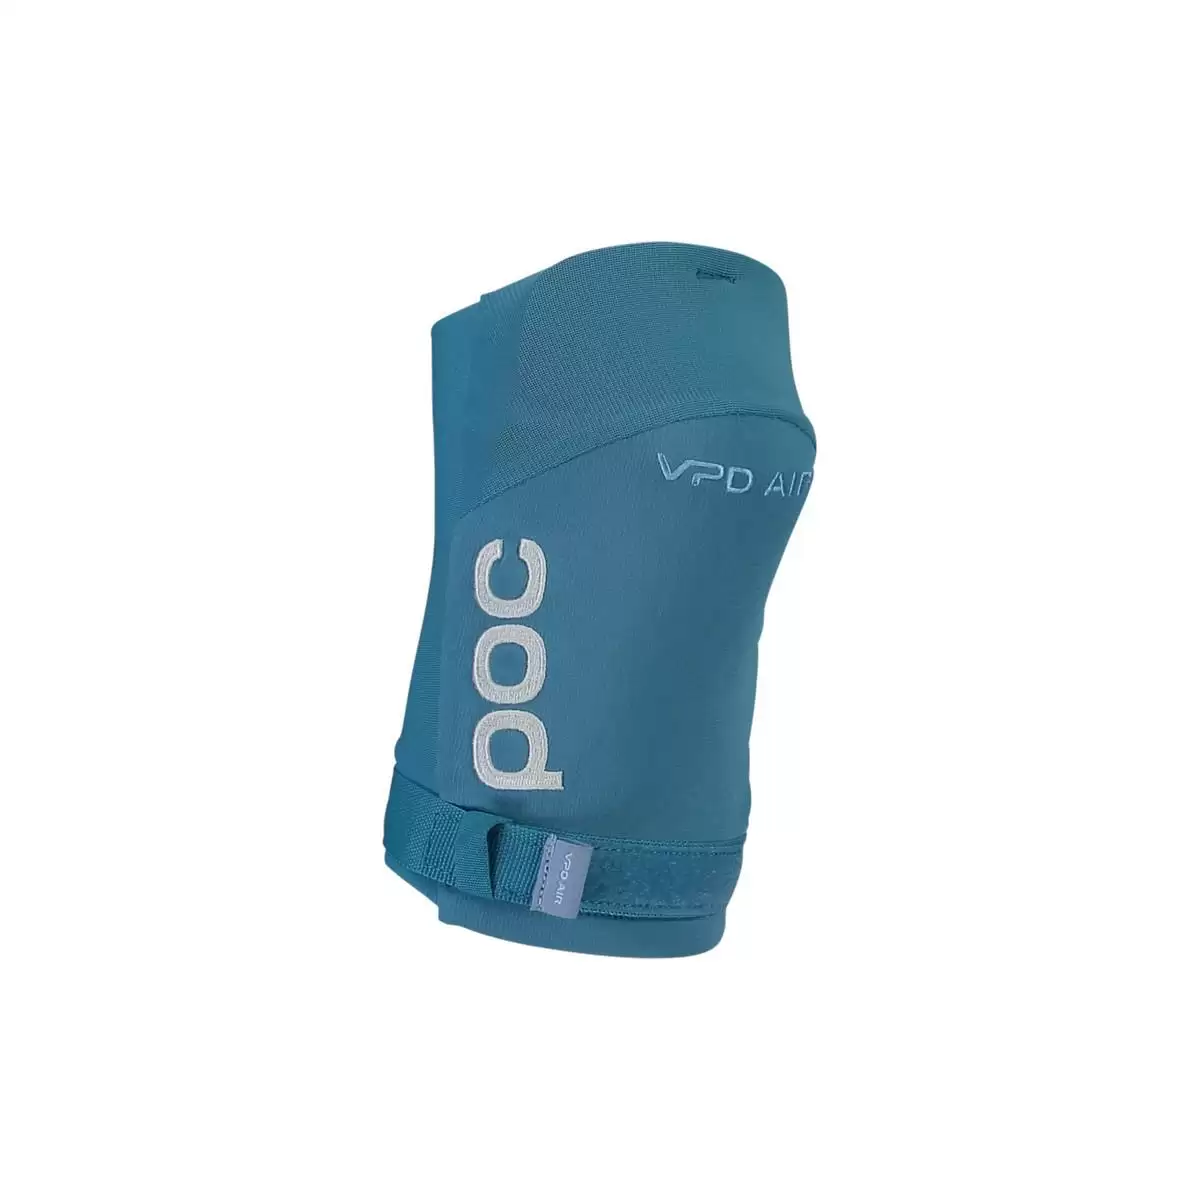 Joint VPD Air Elbow Protectors Basalt Blue Size XS - image